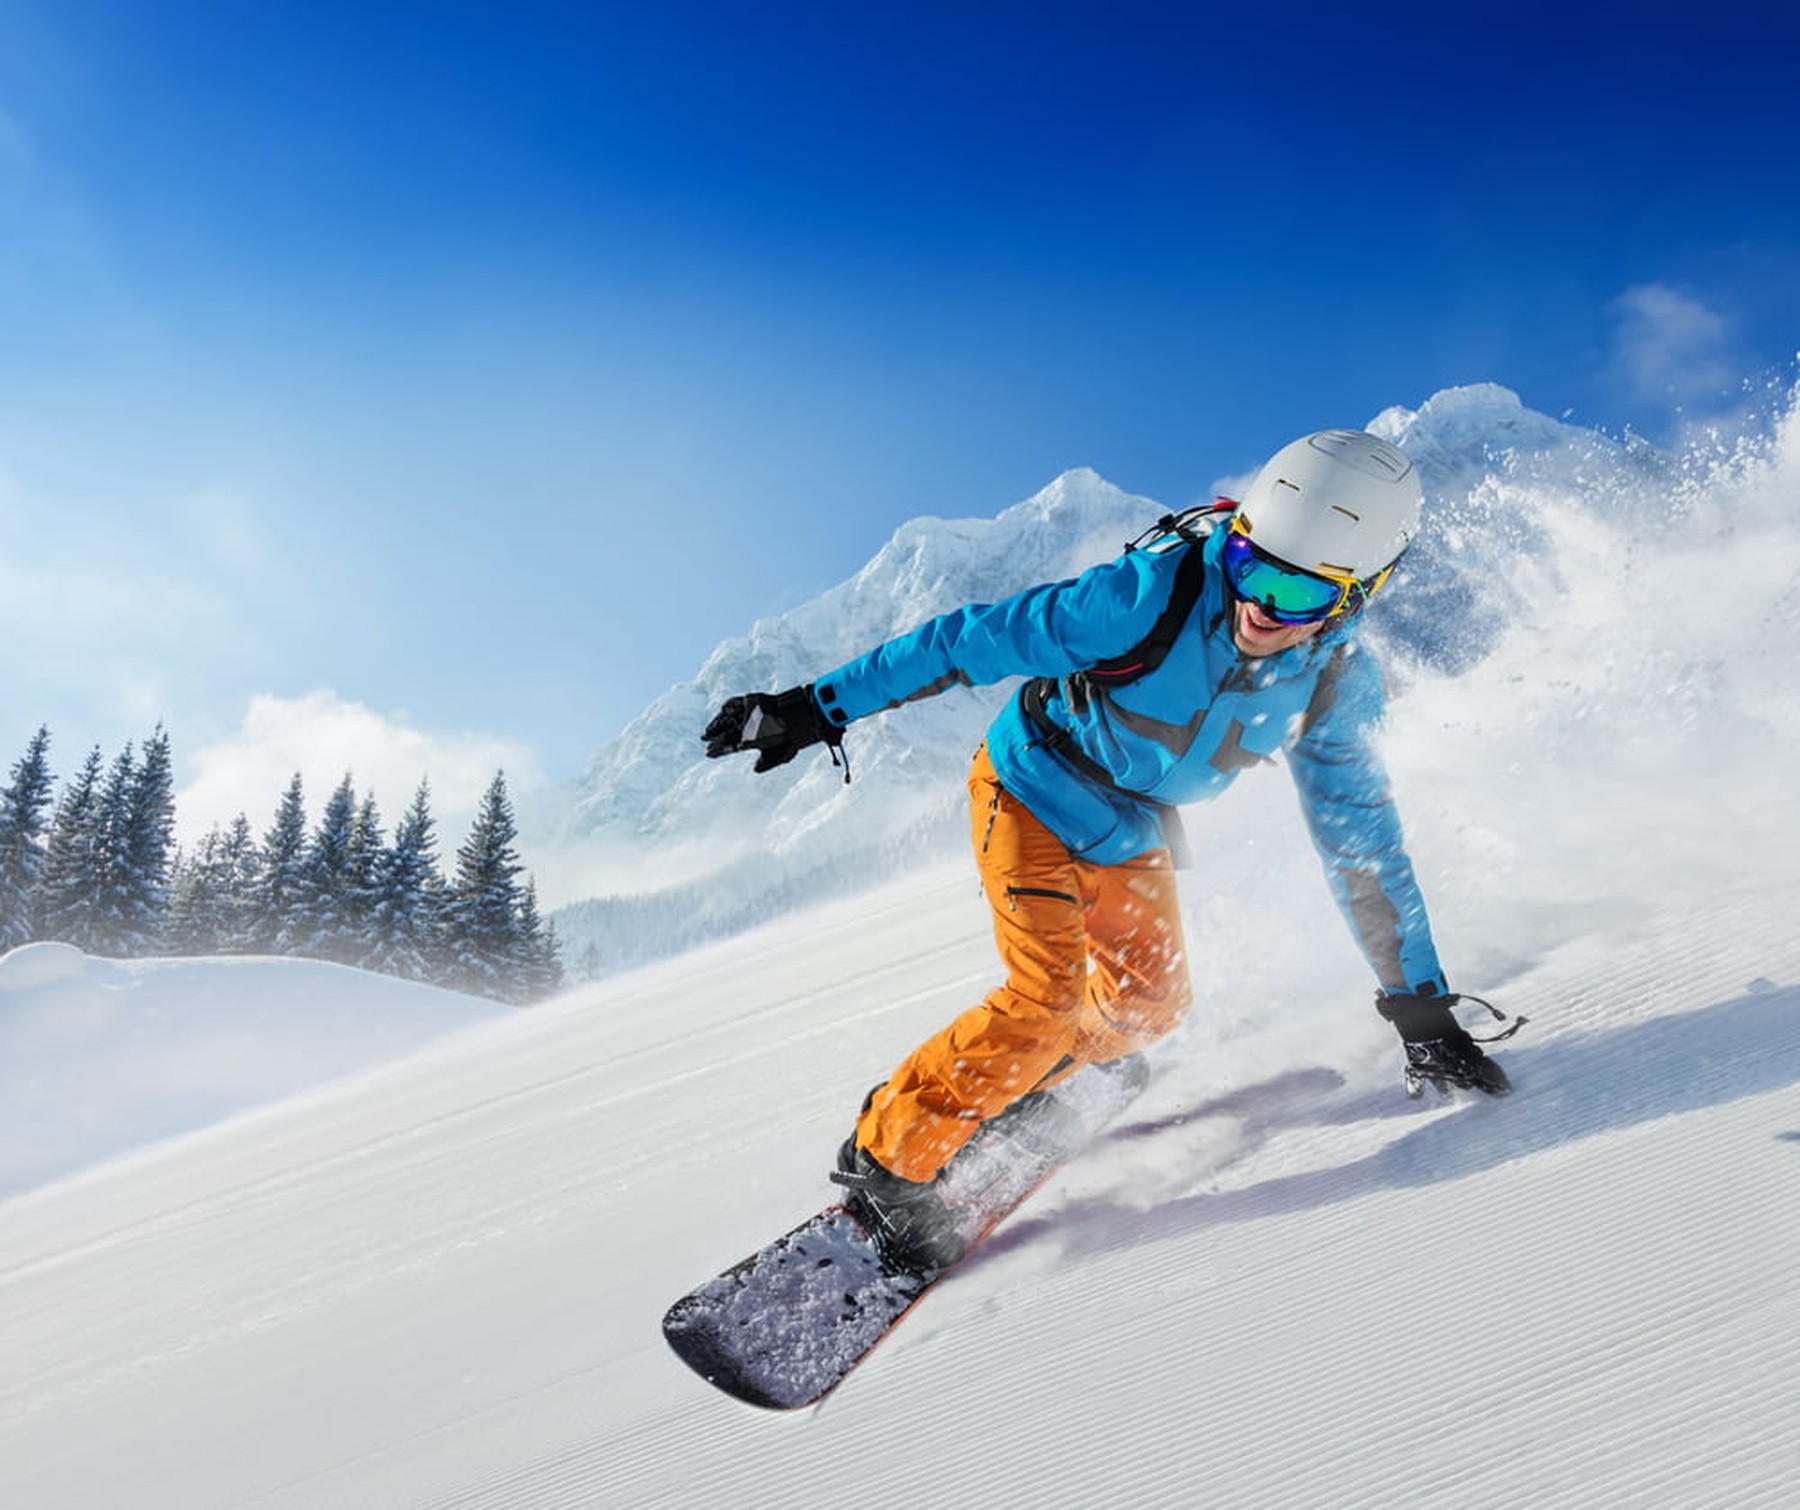 Wintersport: man op snowboard